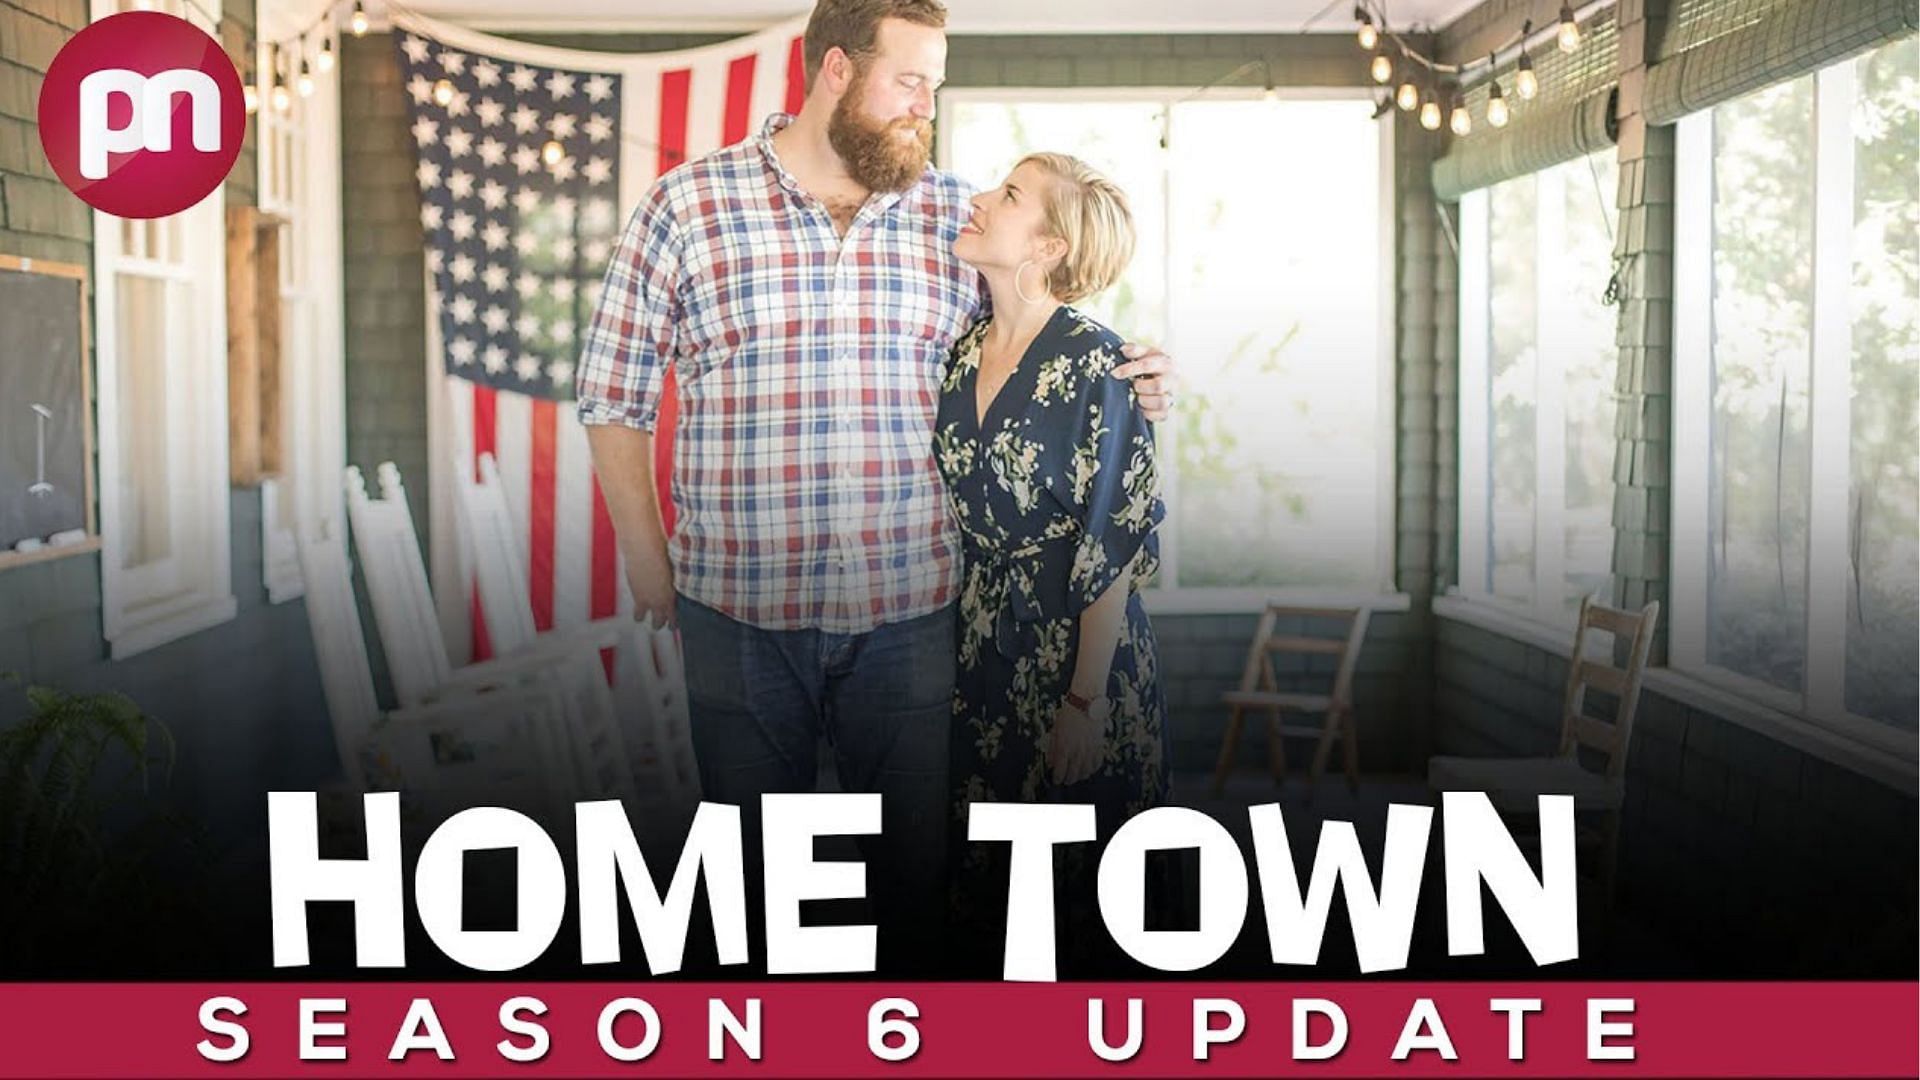 Home Town season 6 (Image via Youtube)